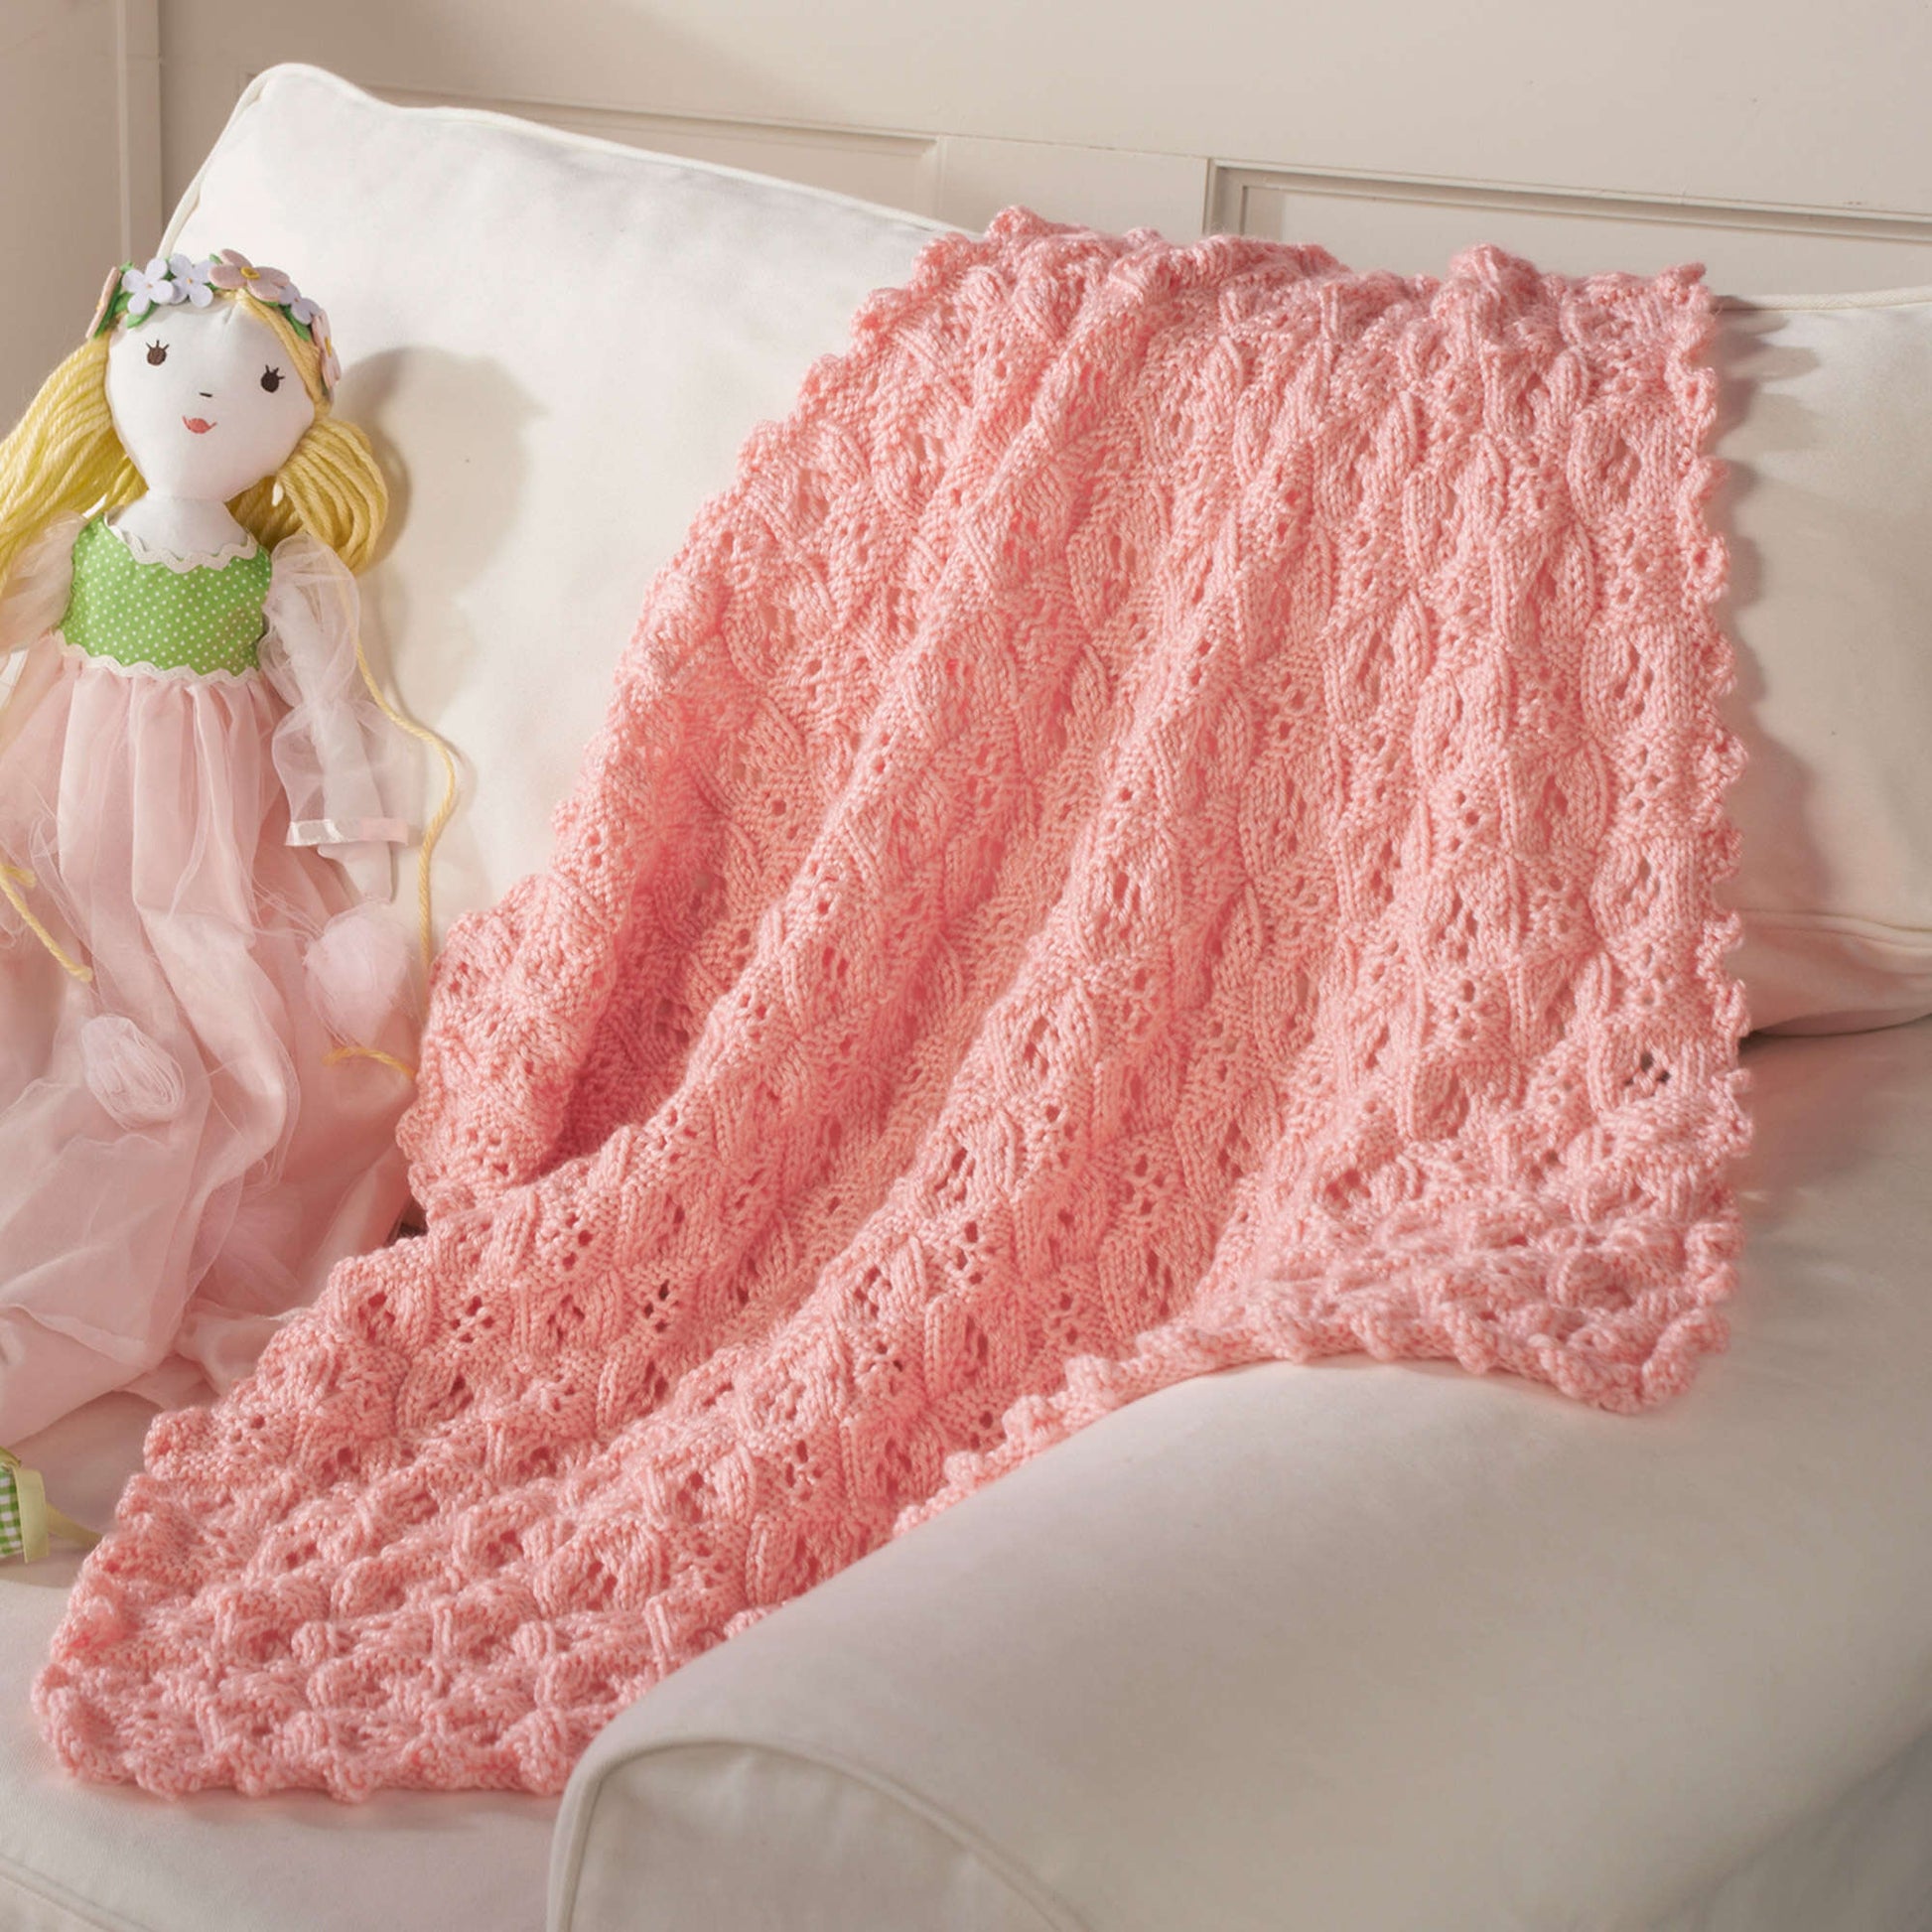 Free Red Heart Princess Knit Blanket Pattern